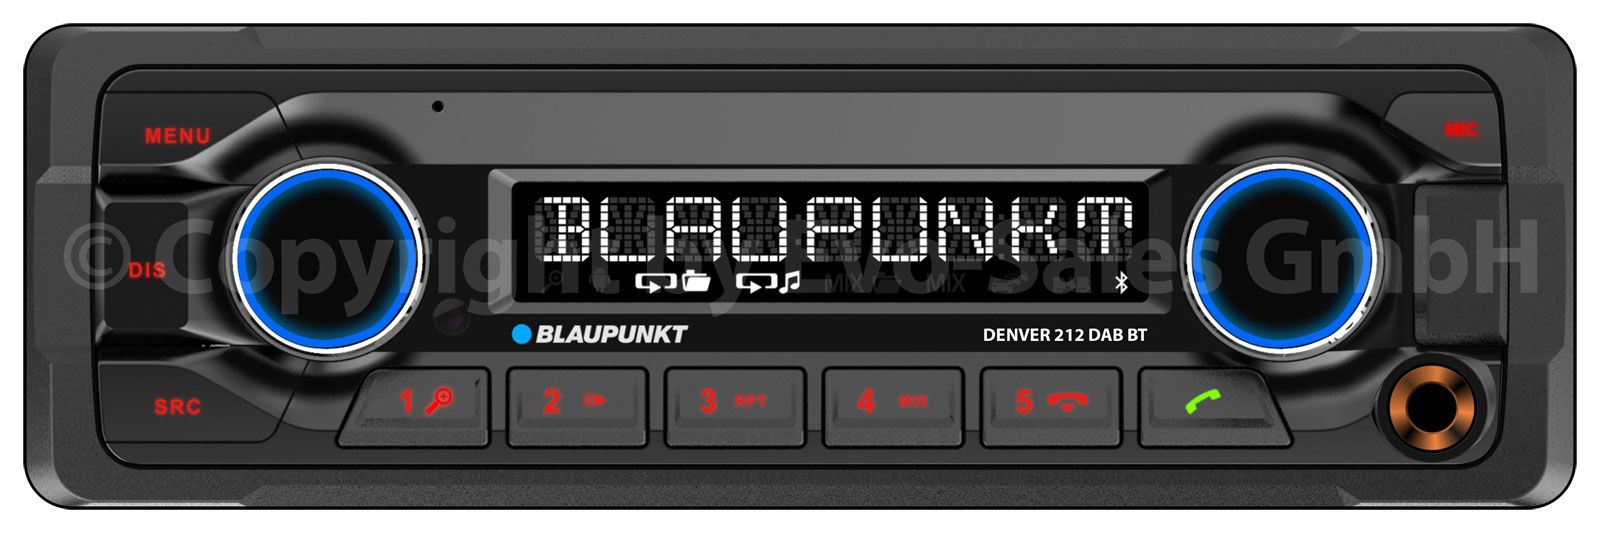 Blaupunkt Denver 212 DAB BT - MP3-Autoradio mit DAB / Bluetooth / USB / AUX-IN